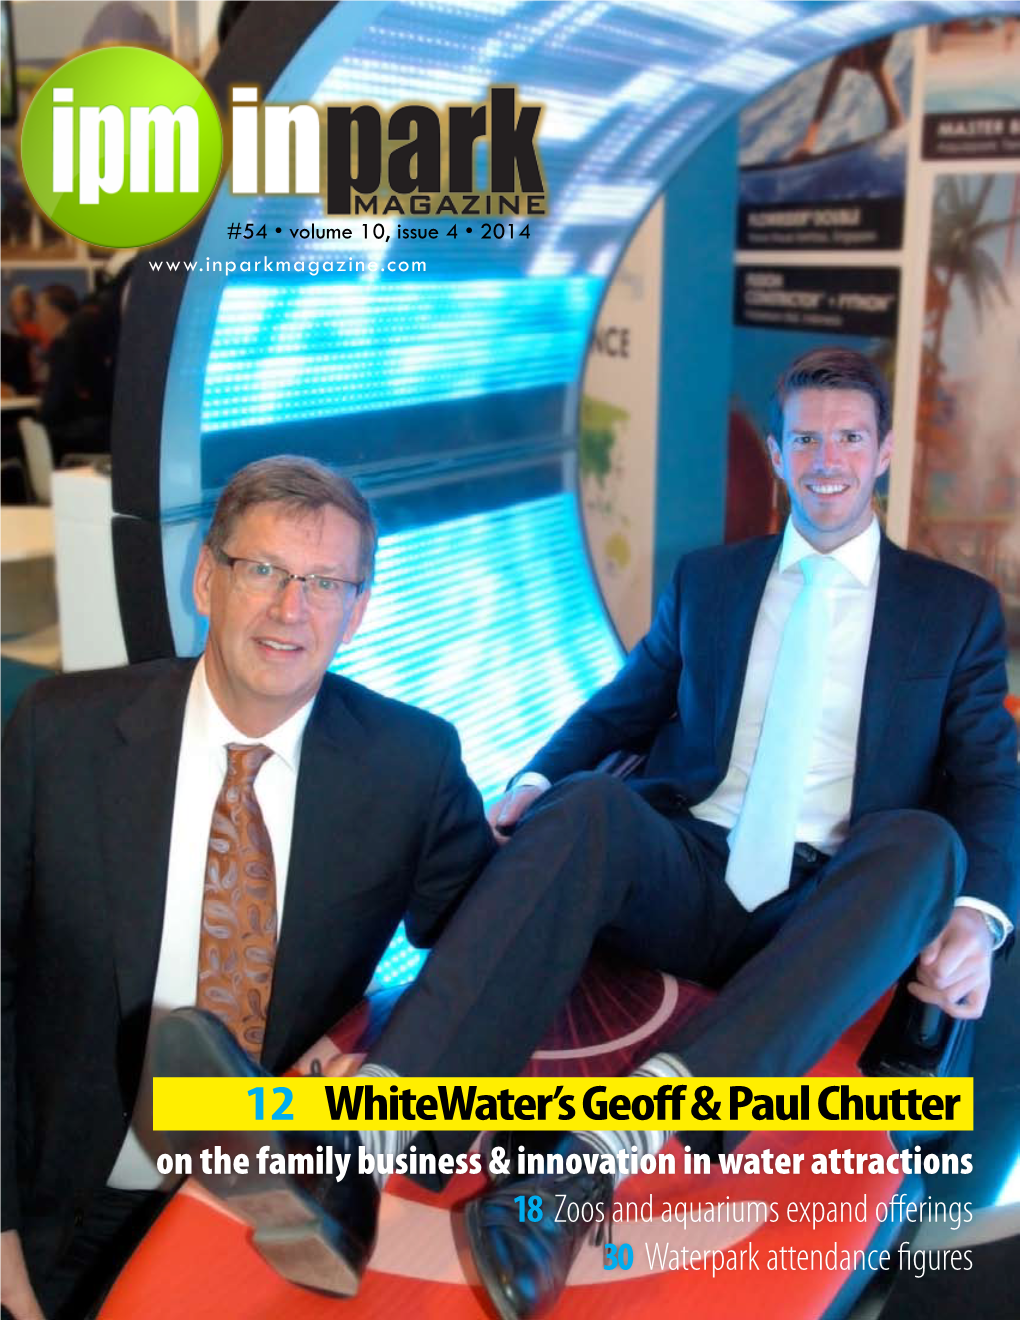 12 Whitewater's Geoff & Paul Chutter